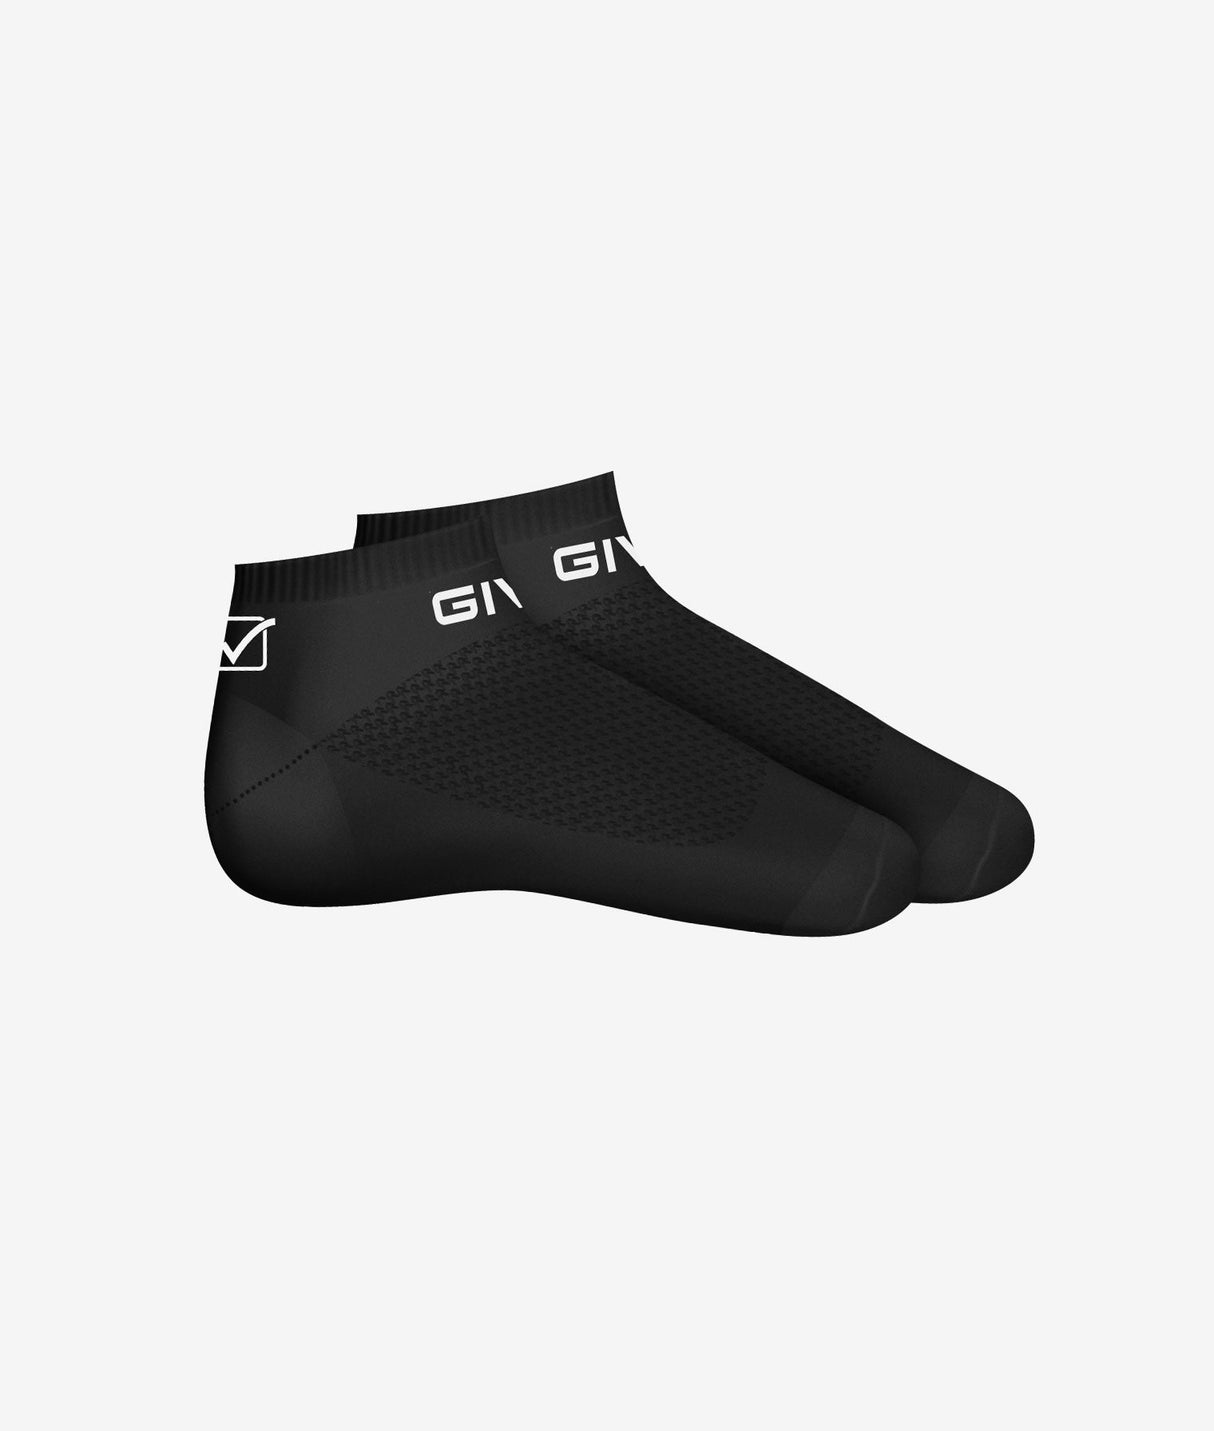 Givova TRIS Socks - black, C032-1003